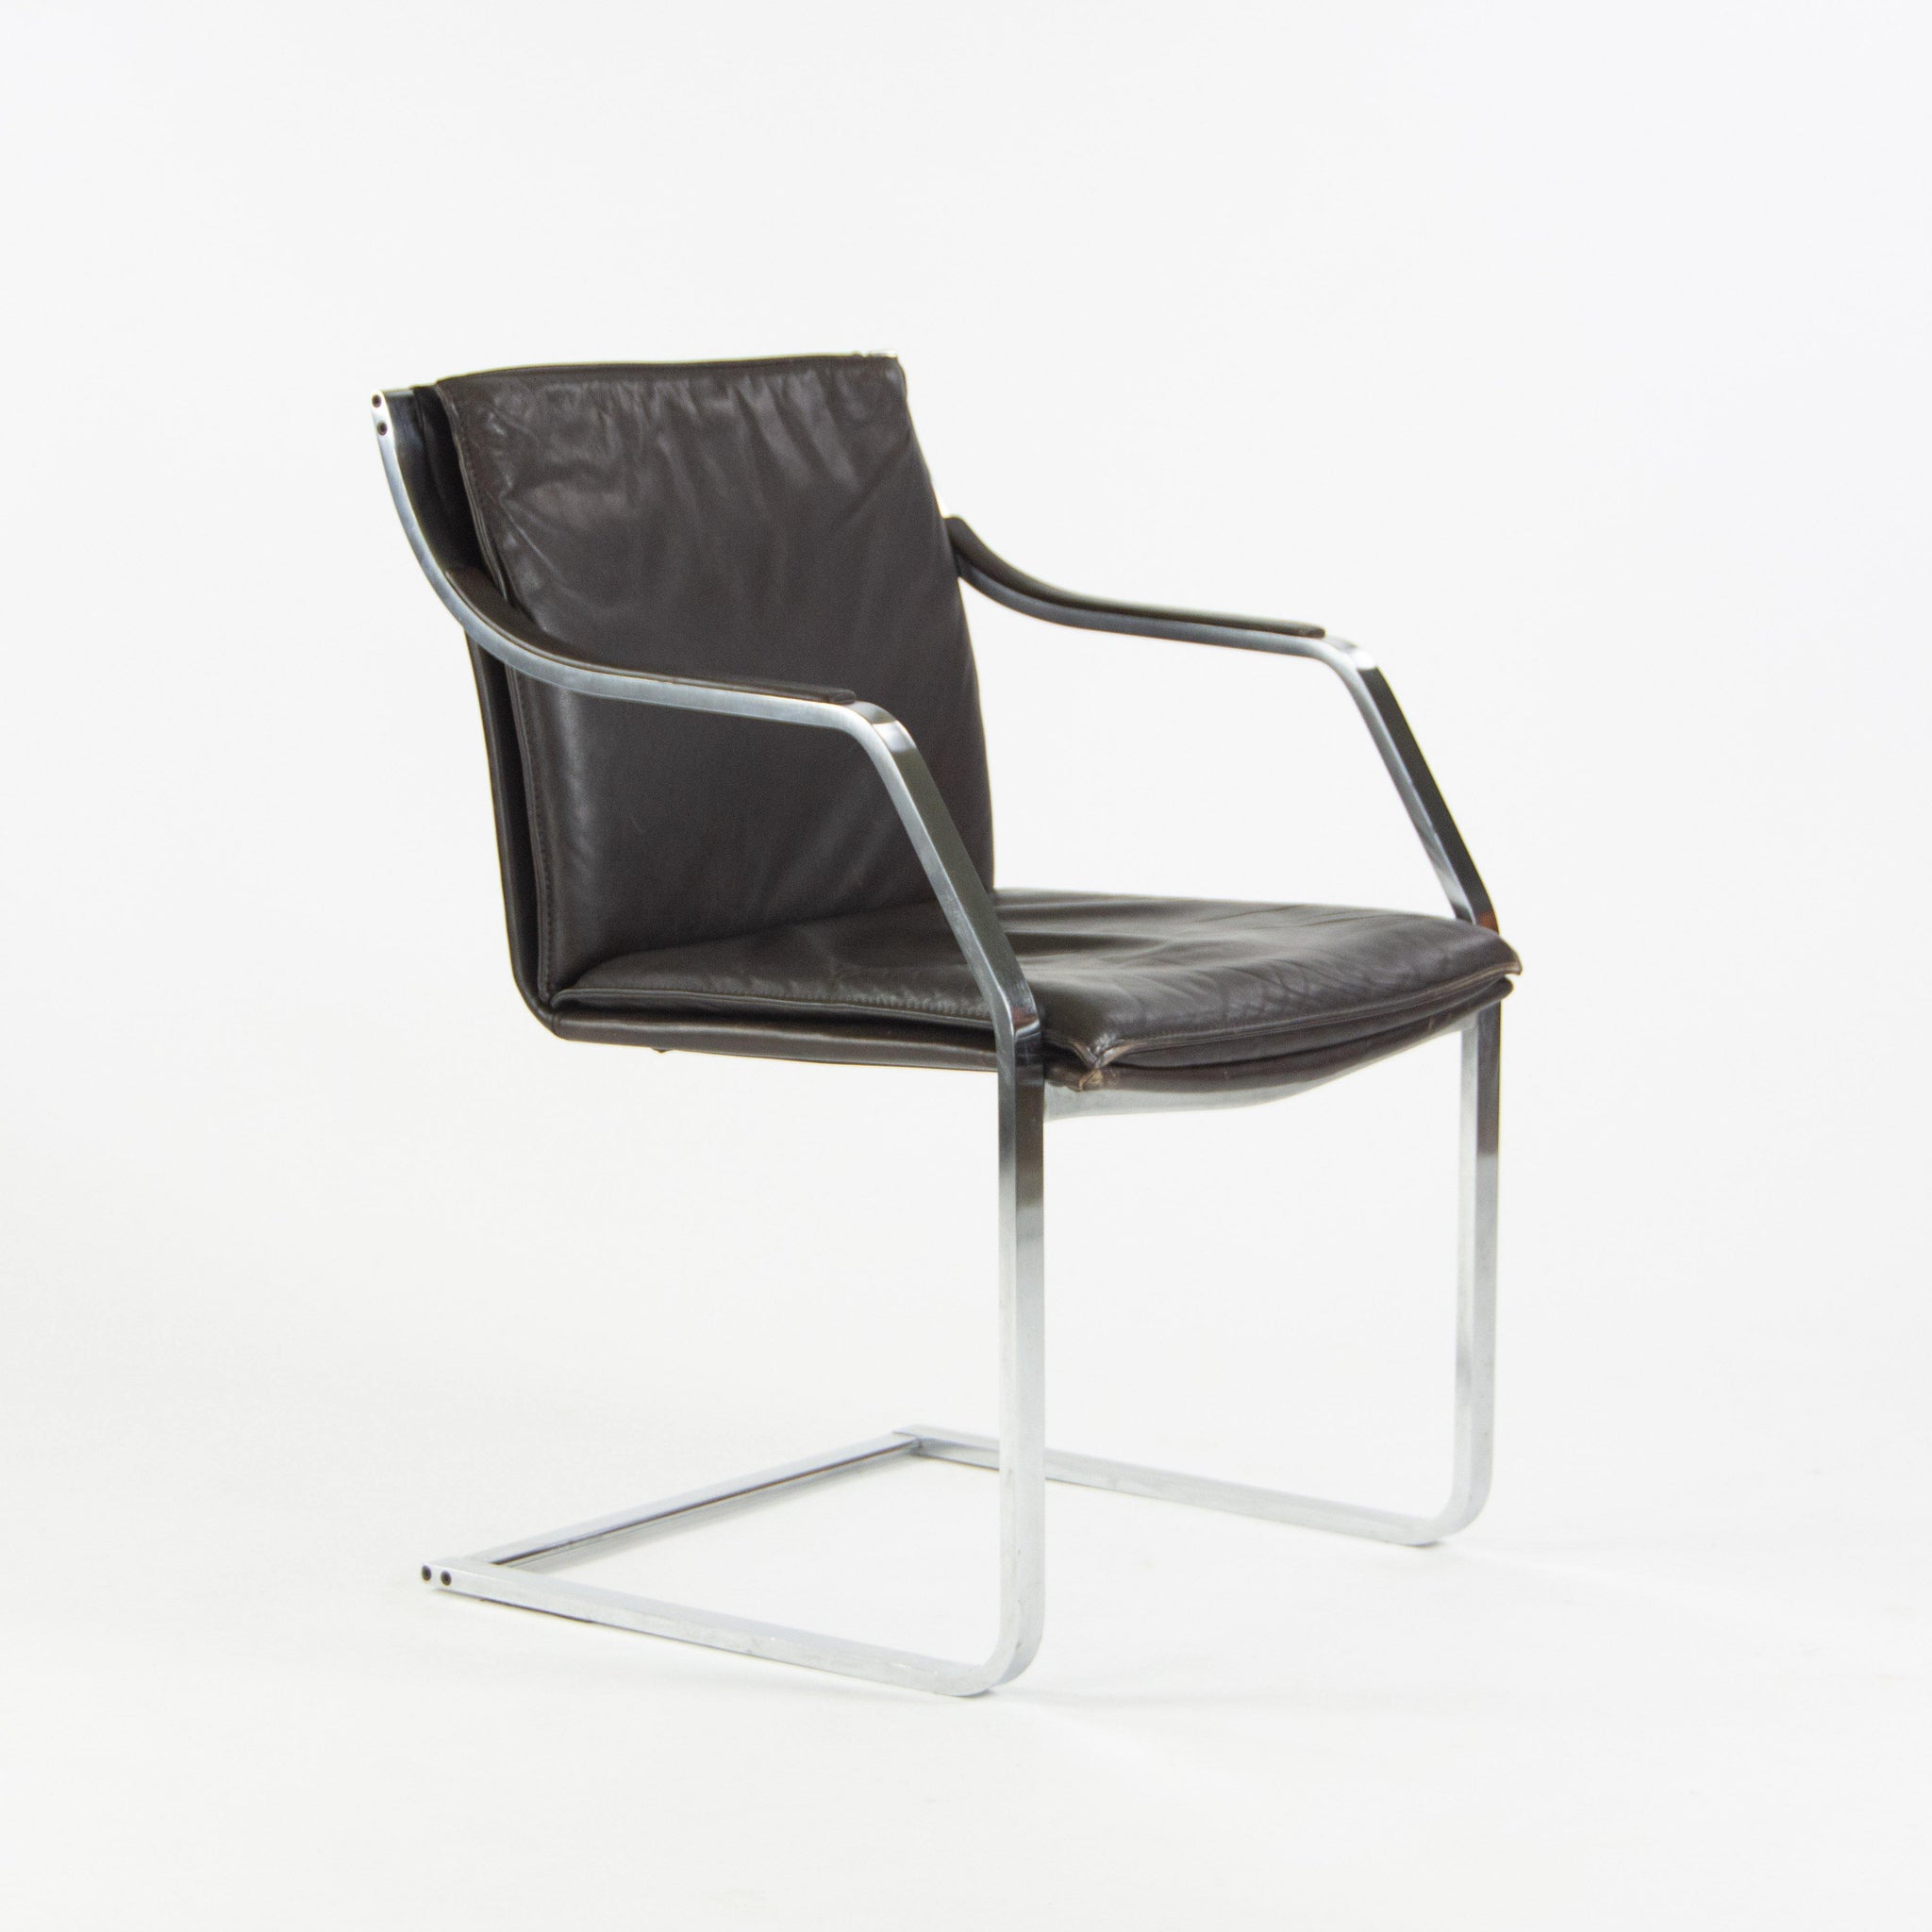 Rudolf B. Glatzel Vintage Walter Knoll Art Collection Leather and Stainless Chair - Rarify Inc.